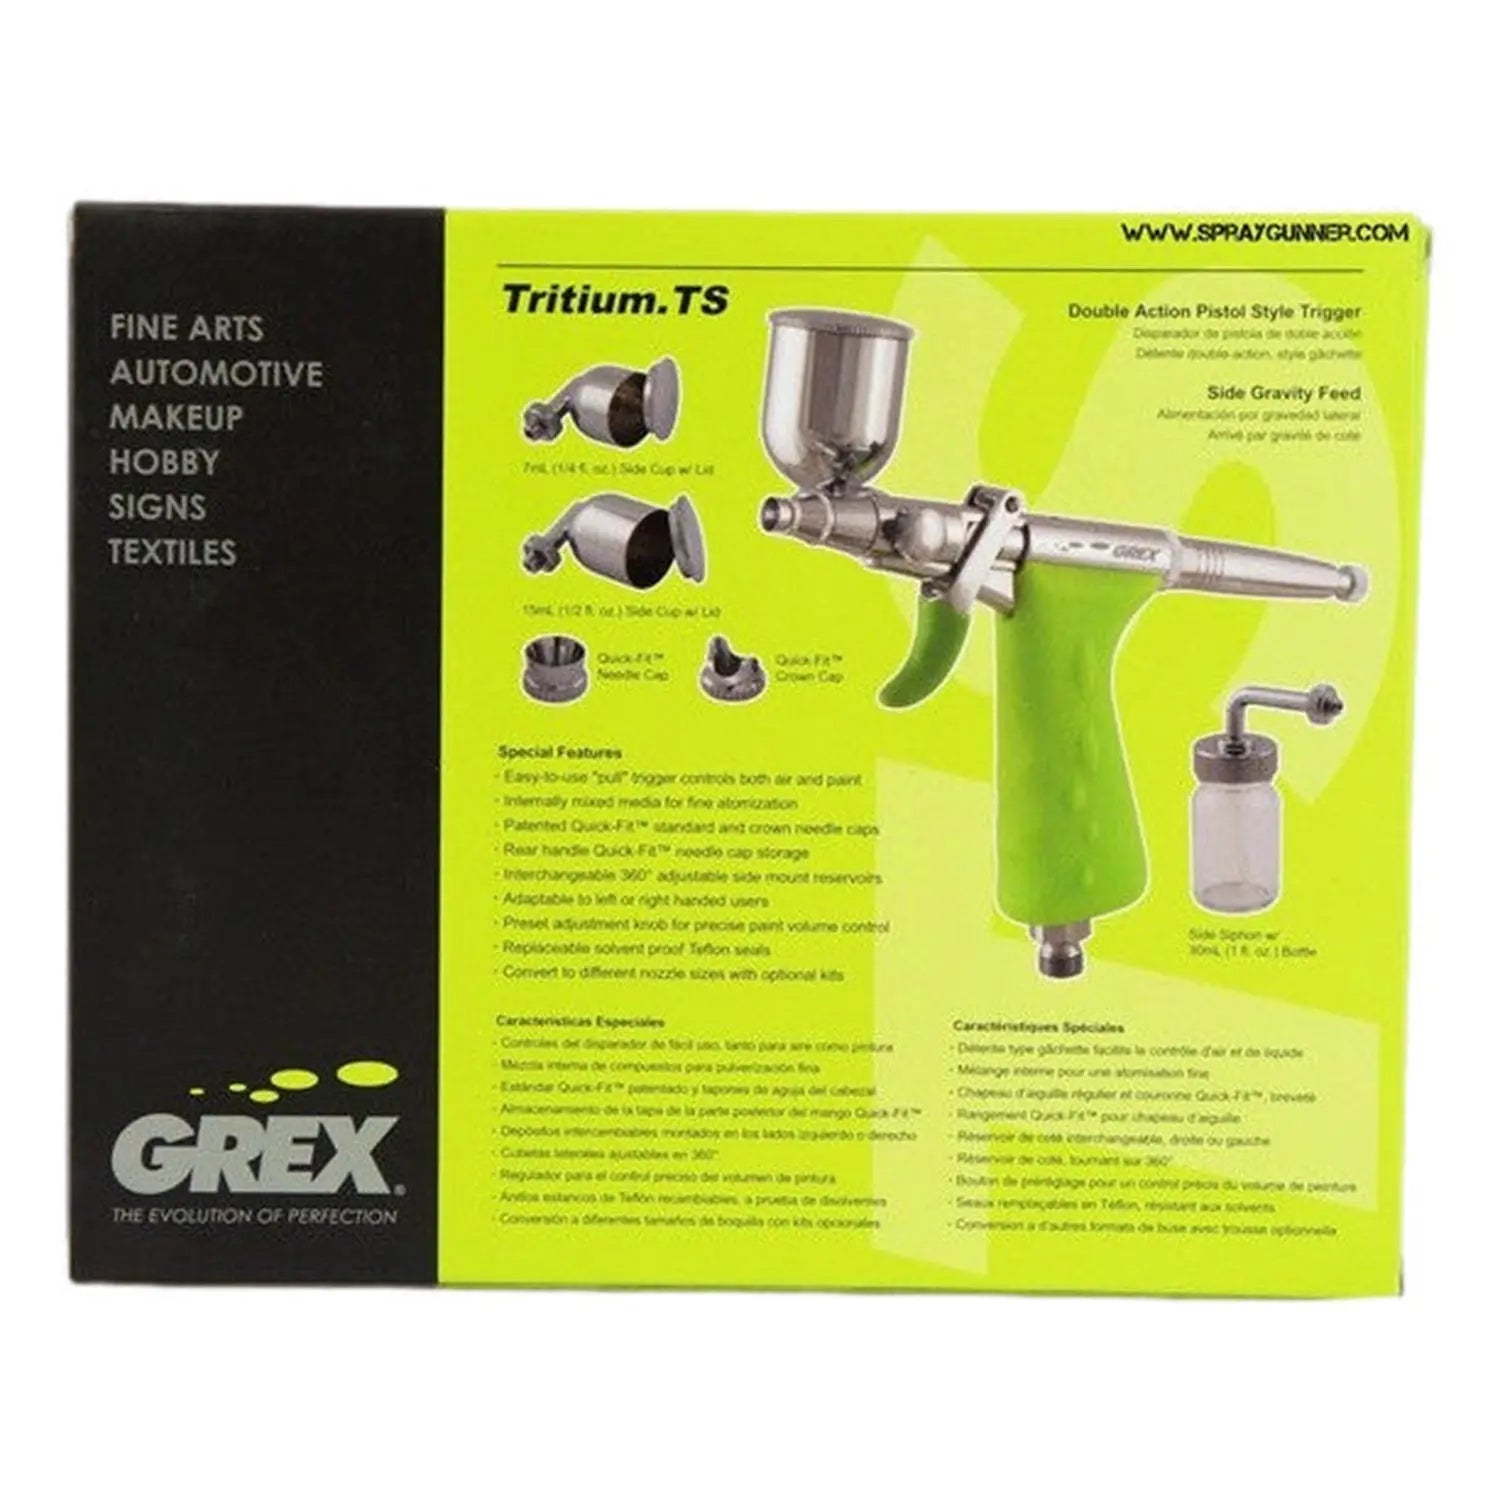 Grex Tritium.TS3 pistol grip airbrush Grex Airbrush